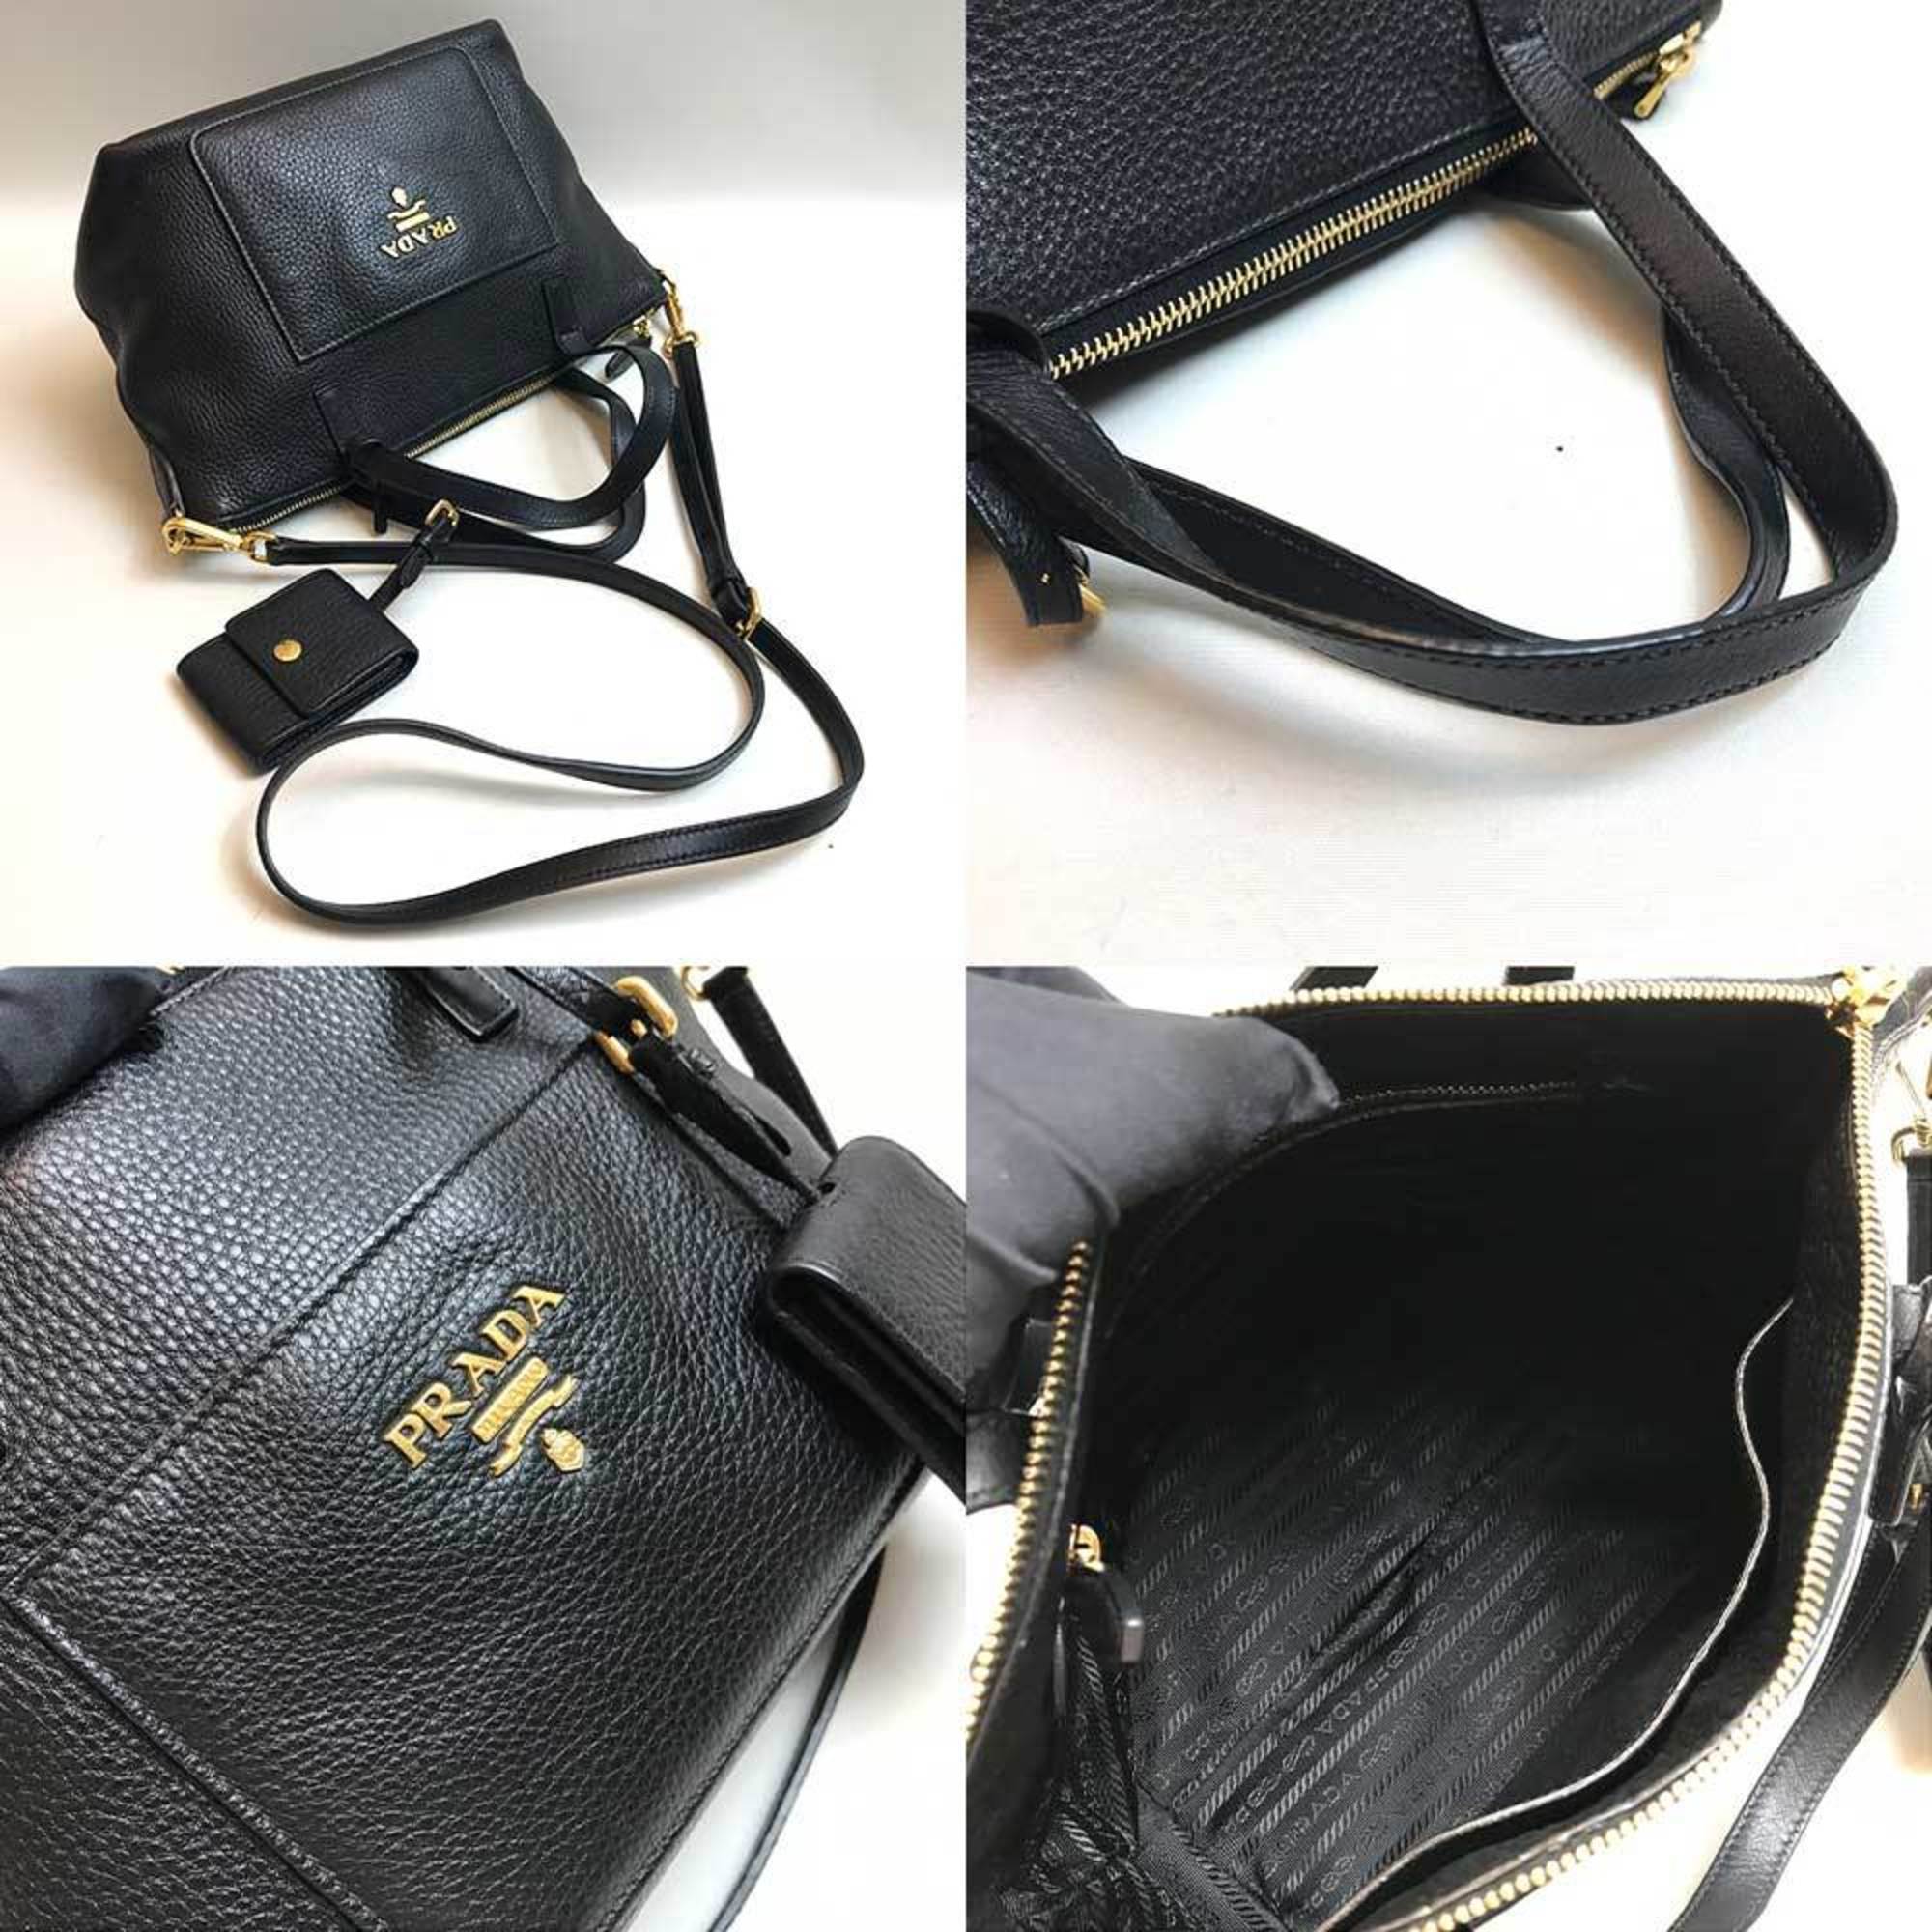 prada bag handbag leather nero black PRADA